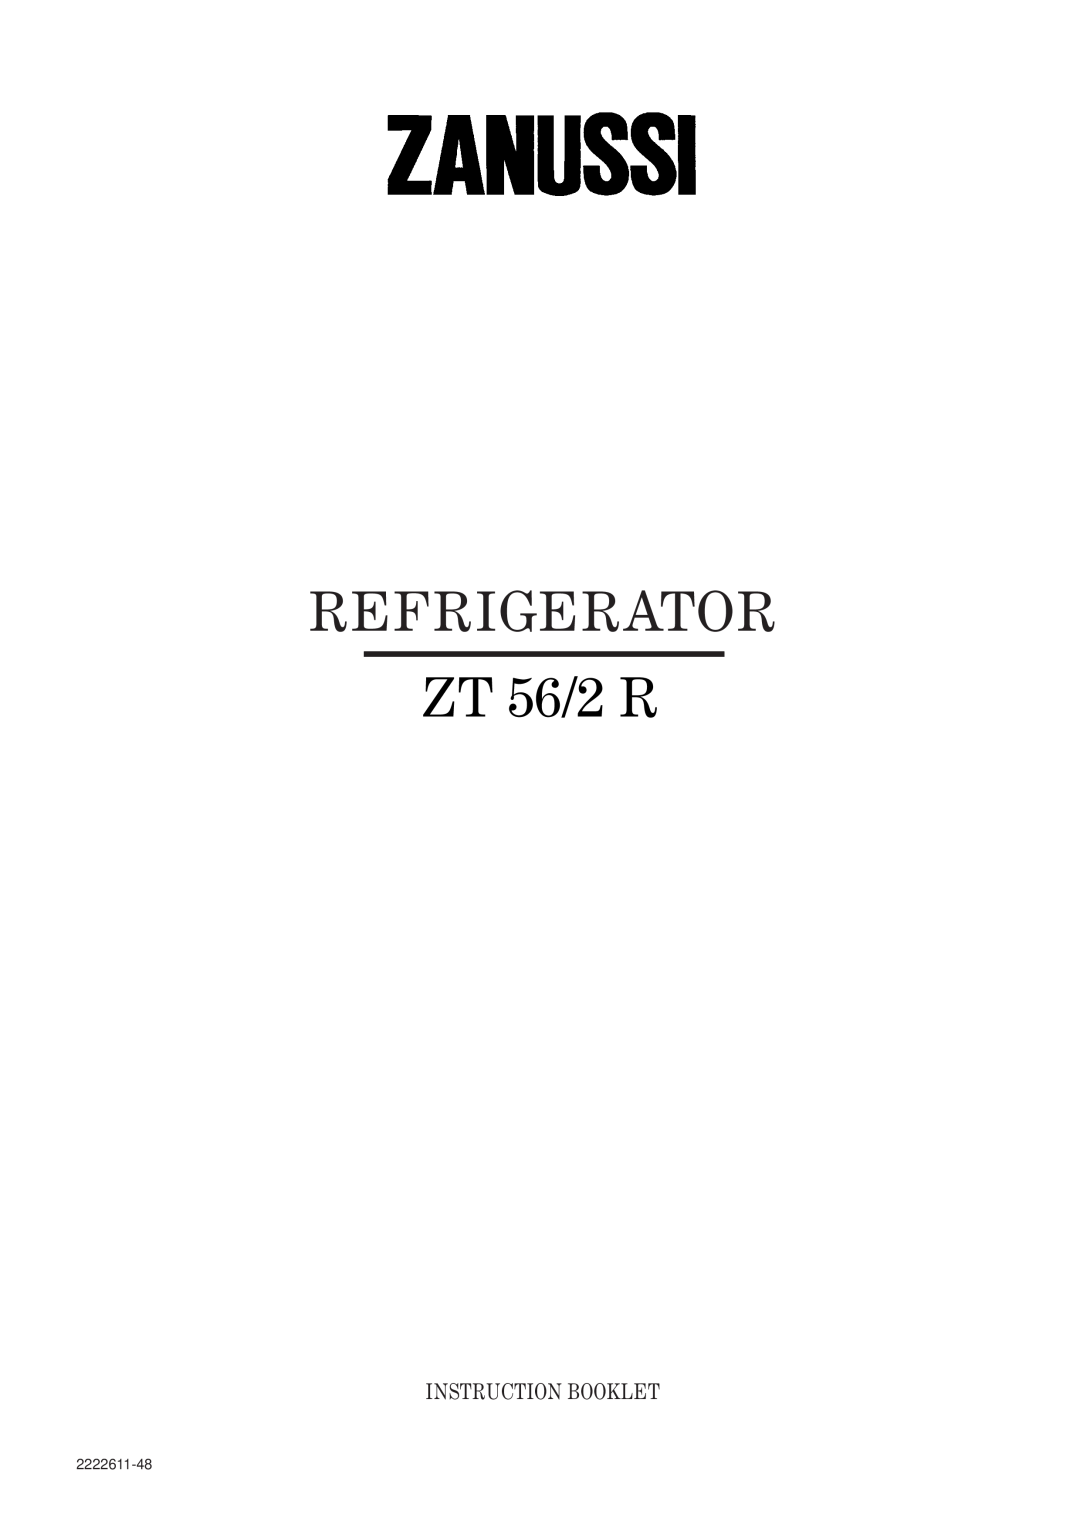 Zanussi ZT 56/2 R manual Refrigerator, Instruction Booklet, 2222611-48 